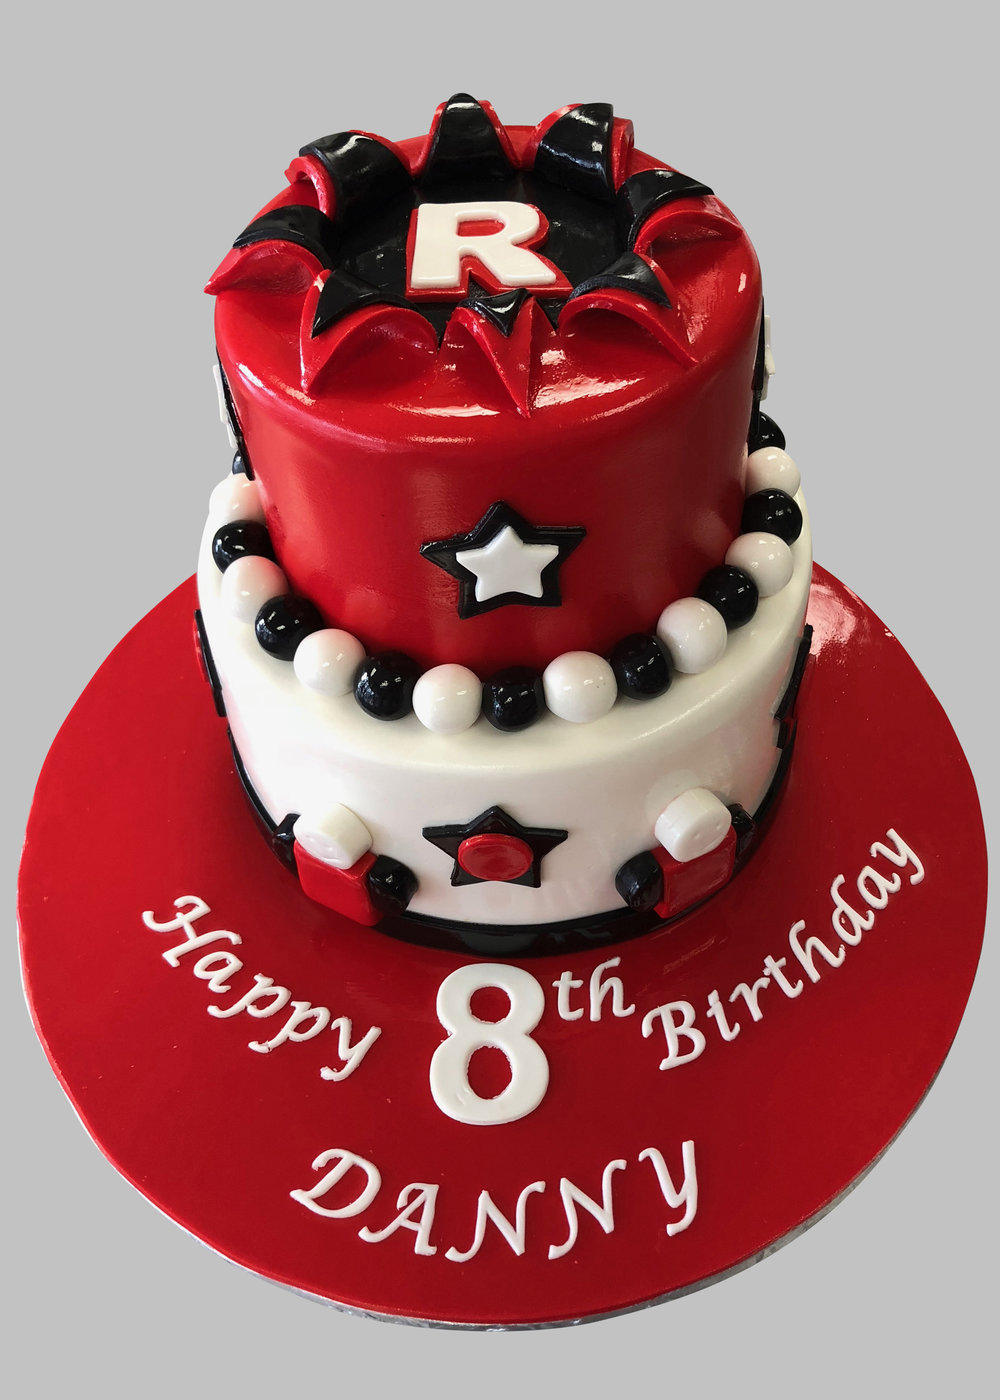 CAKED - Red stripe cake! I jad a lot of fun creating this one!!! #redcake  #birthdaycake #marblecake #buttercream #stripes #stripecake #CAKED  #cakesofinstagram #mombaker #minnesotabaker | Facebook